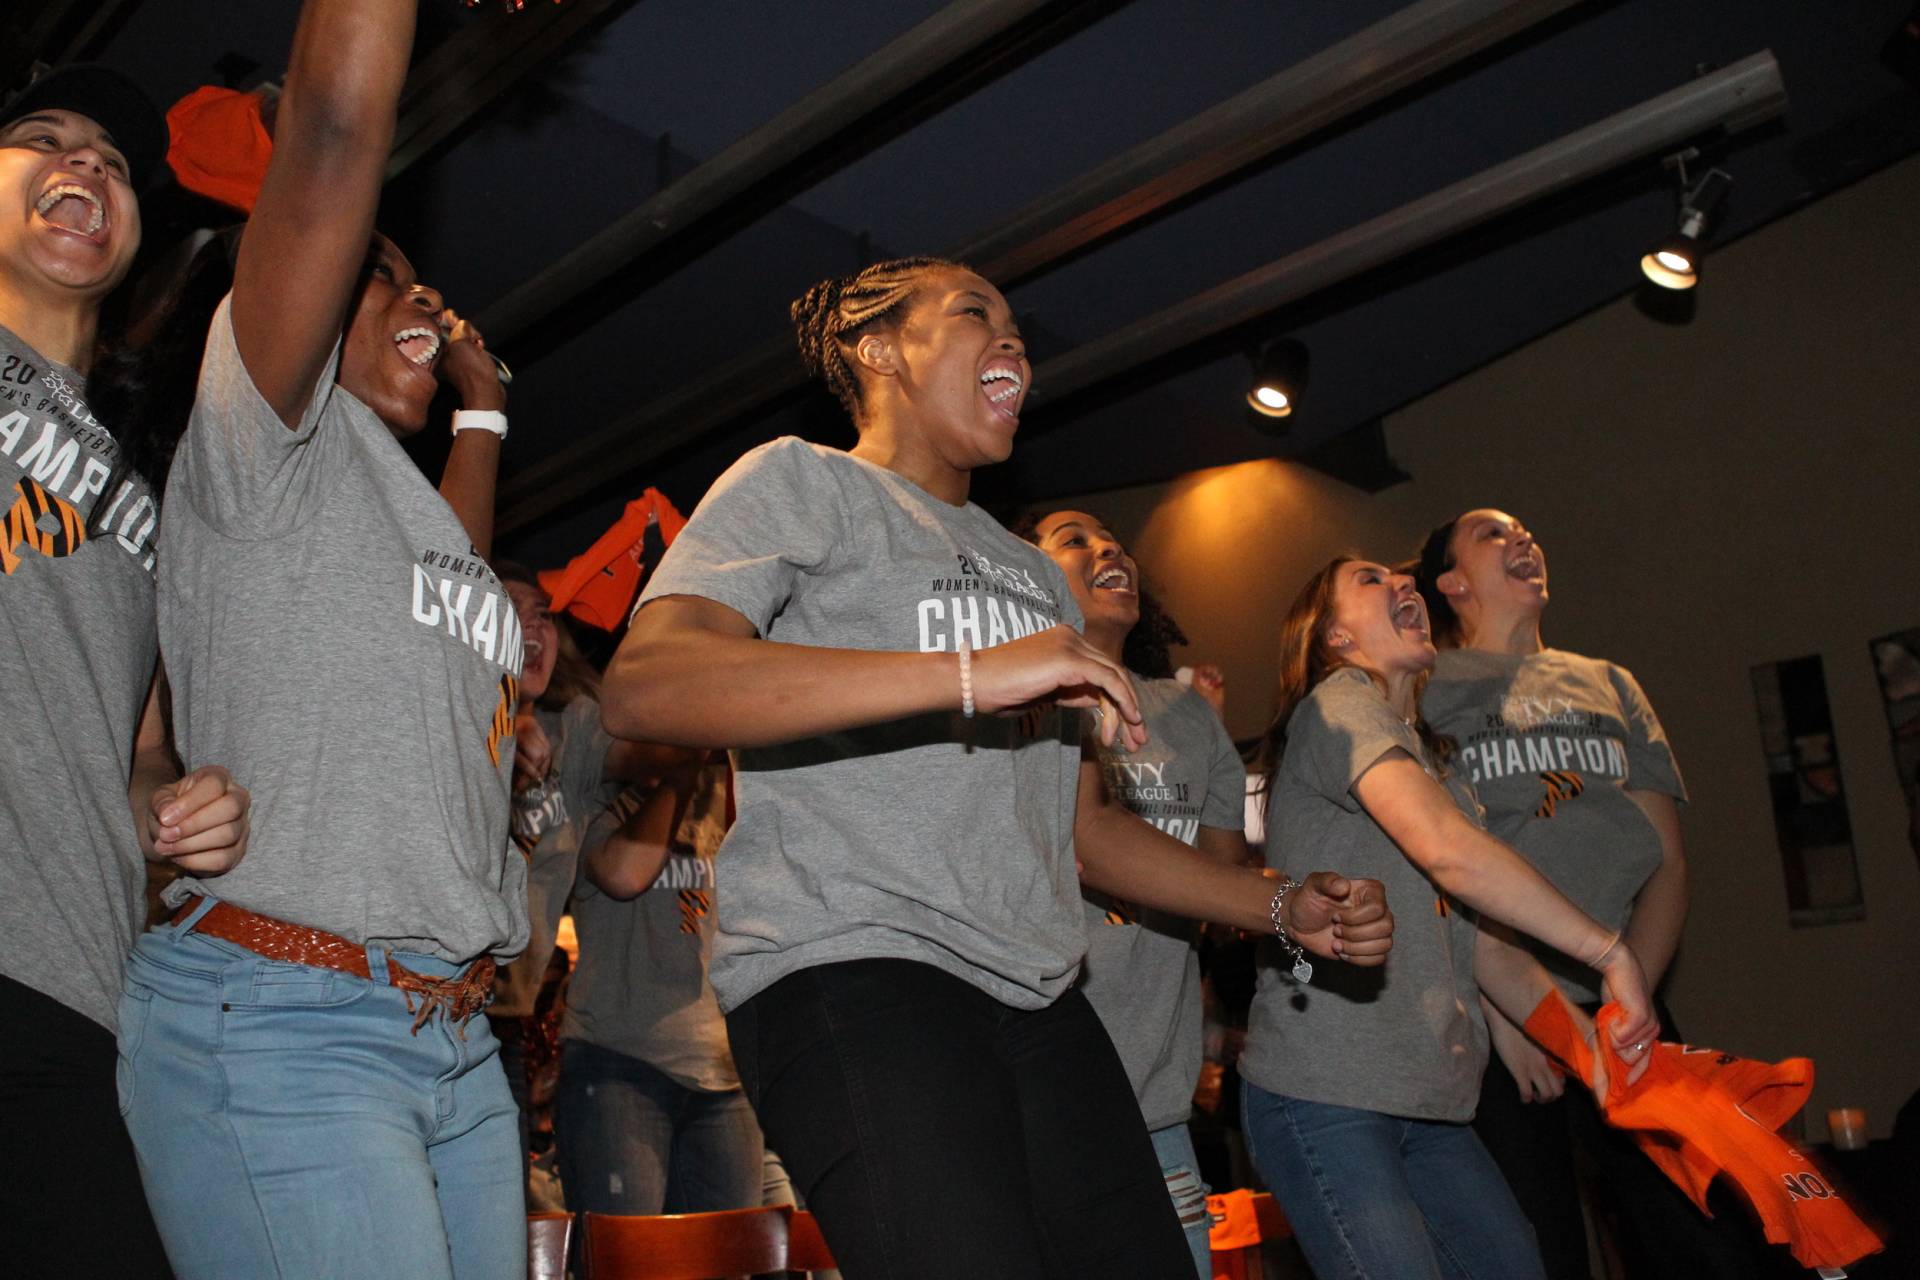 Princeton women's basketball team cheering